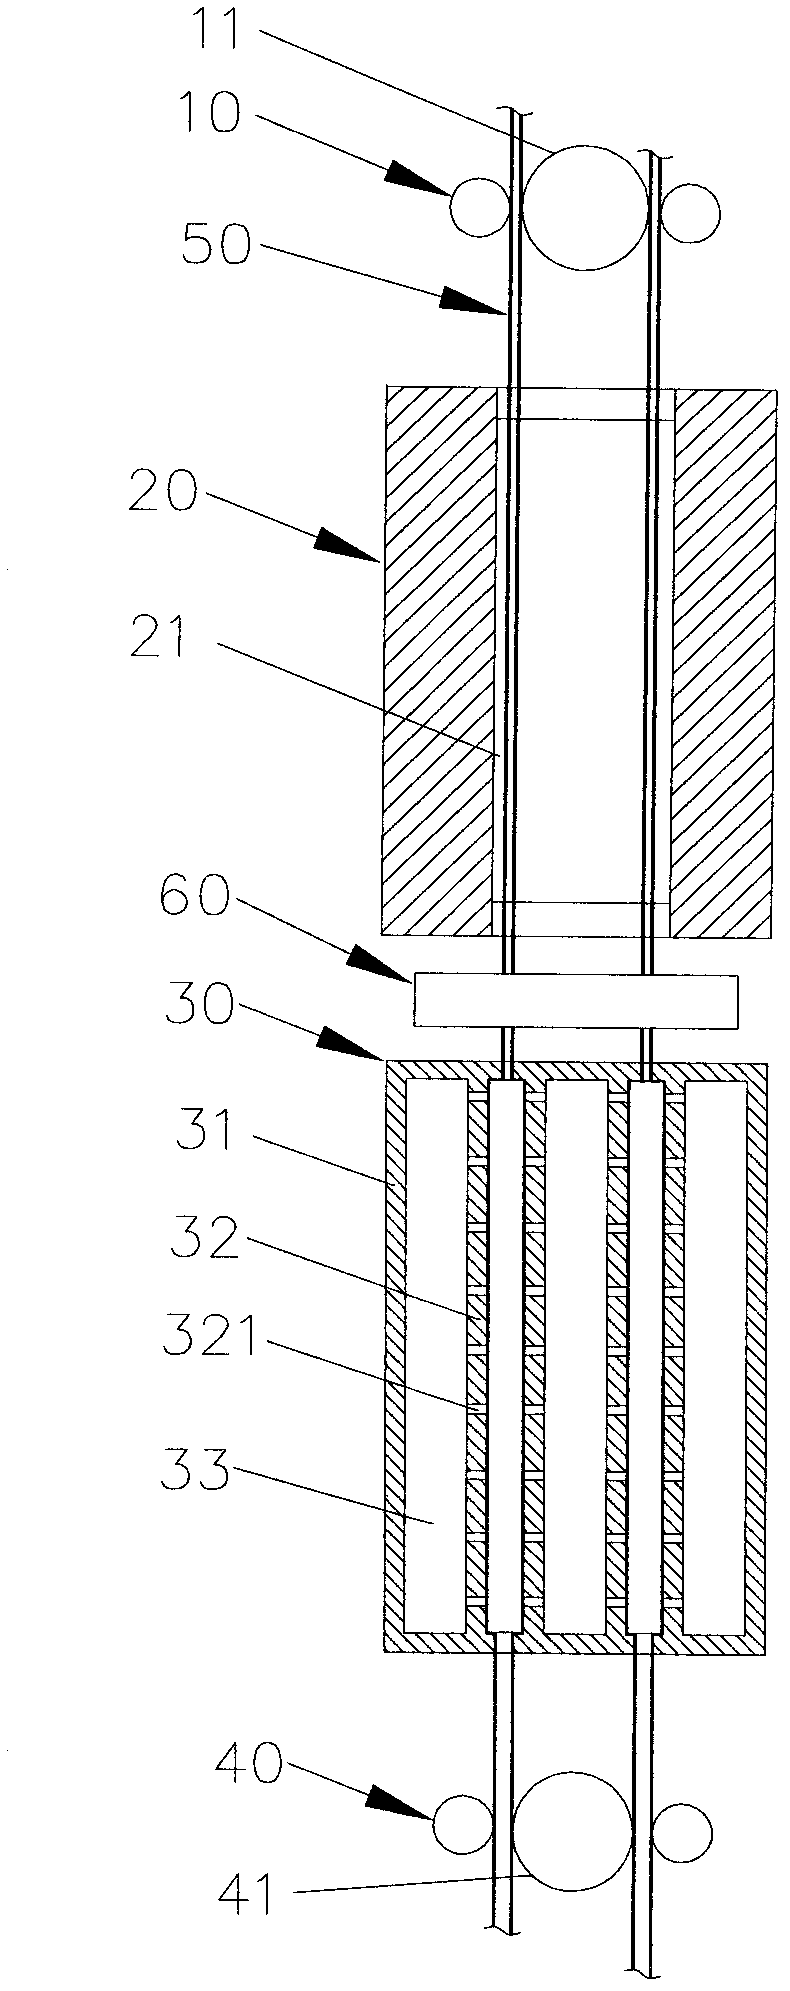 Method for heating shrinkable tubes and shrinkable tube expanding system using same